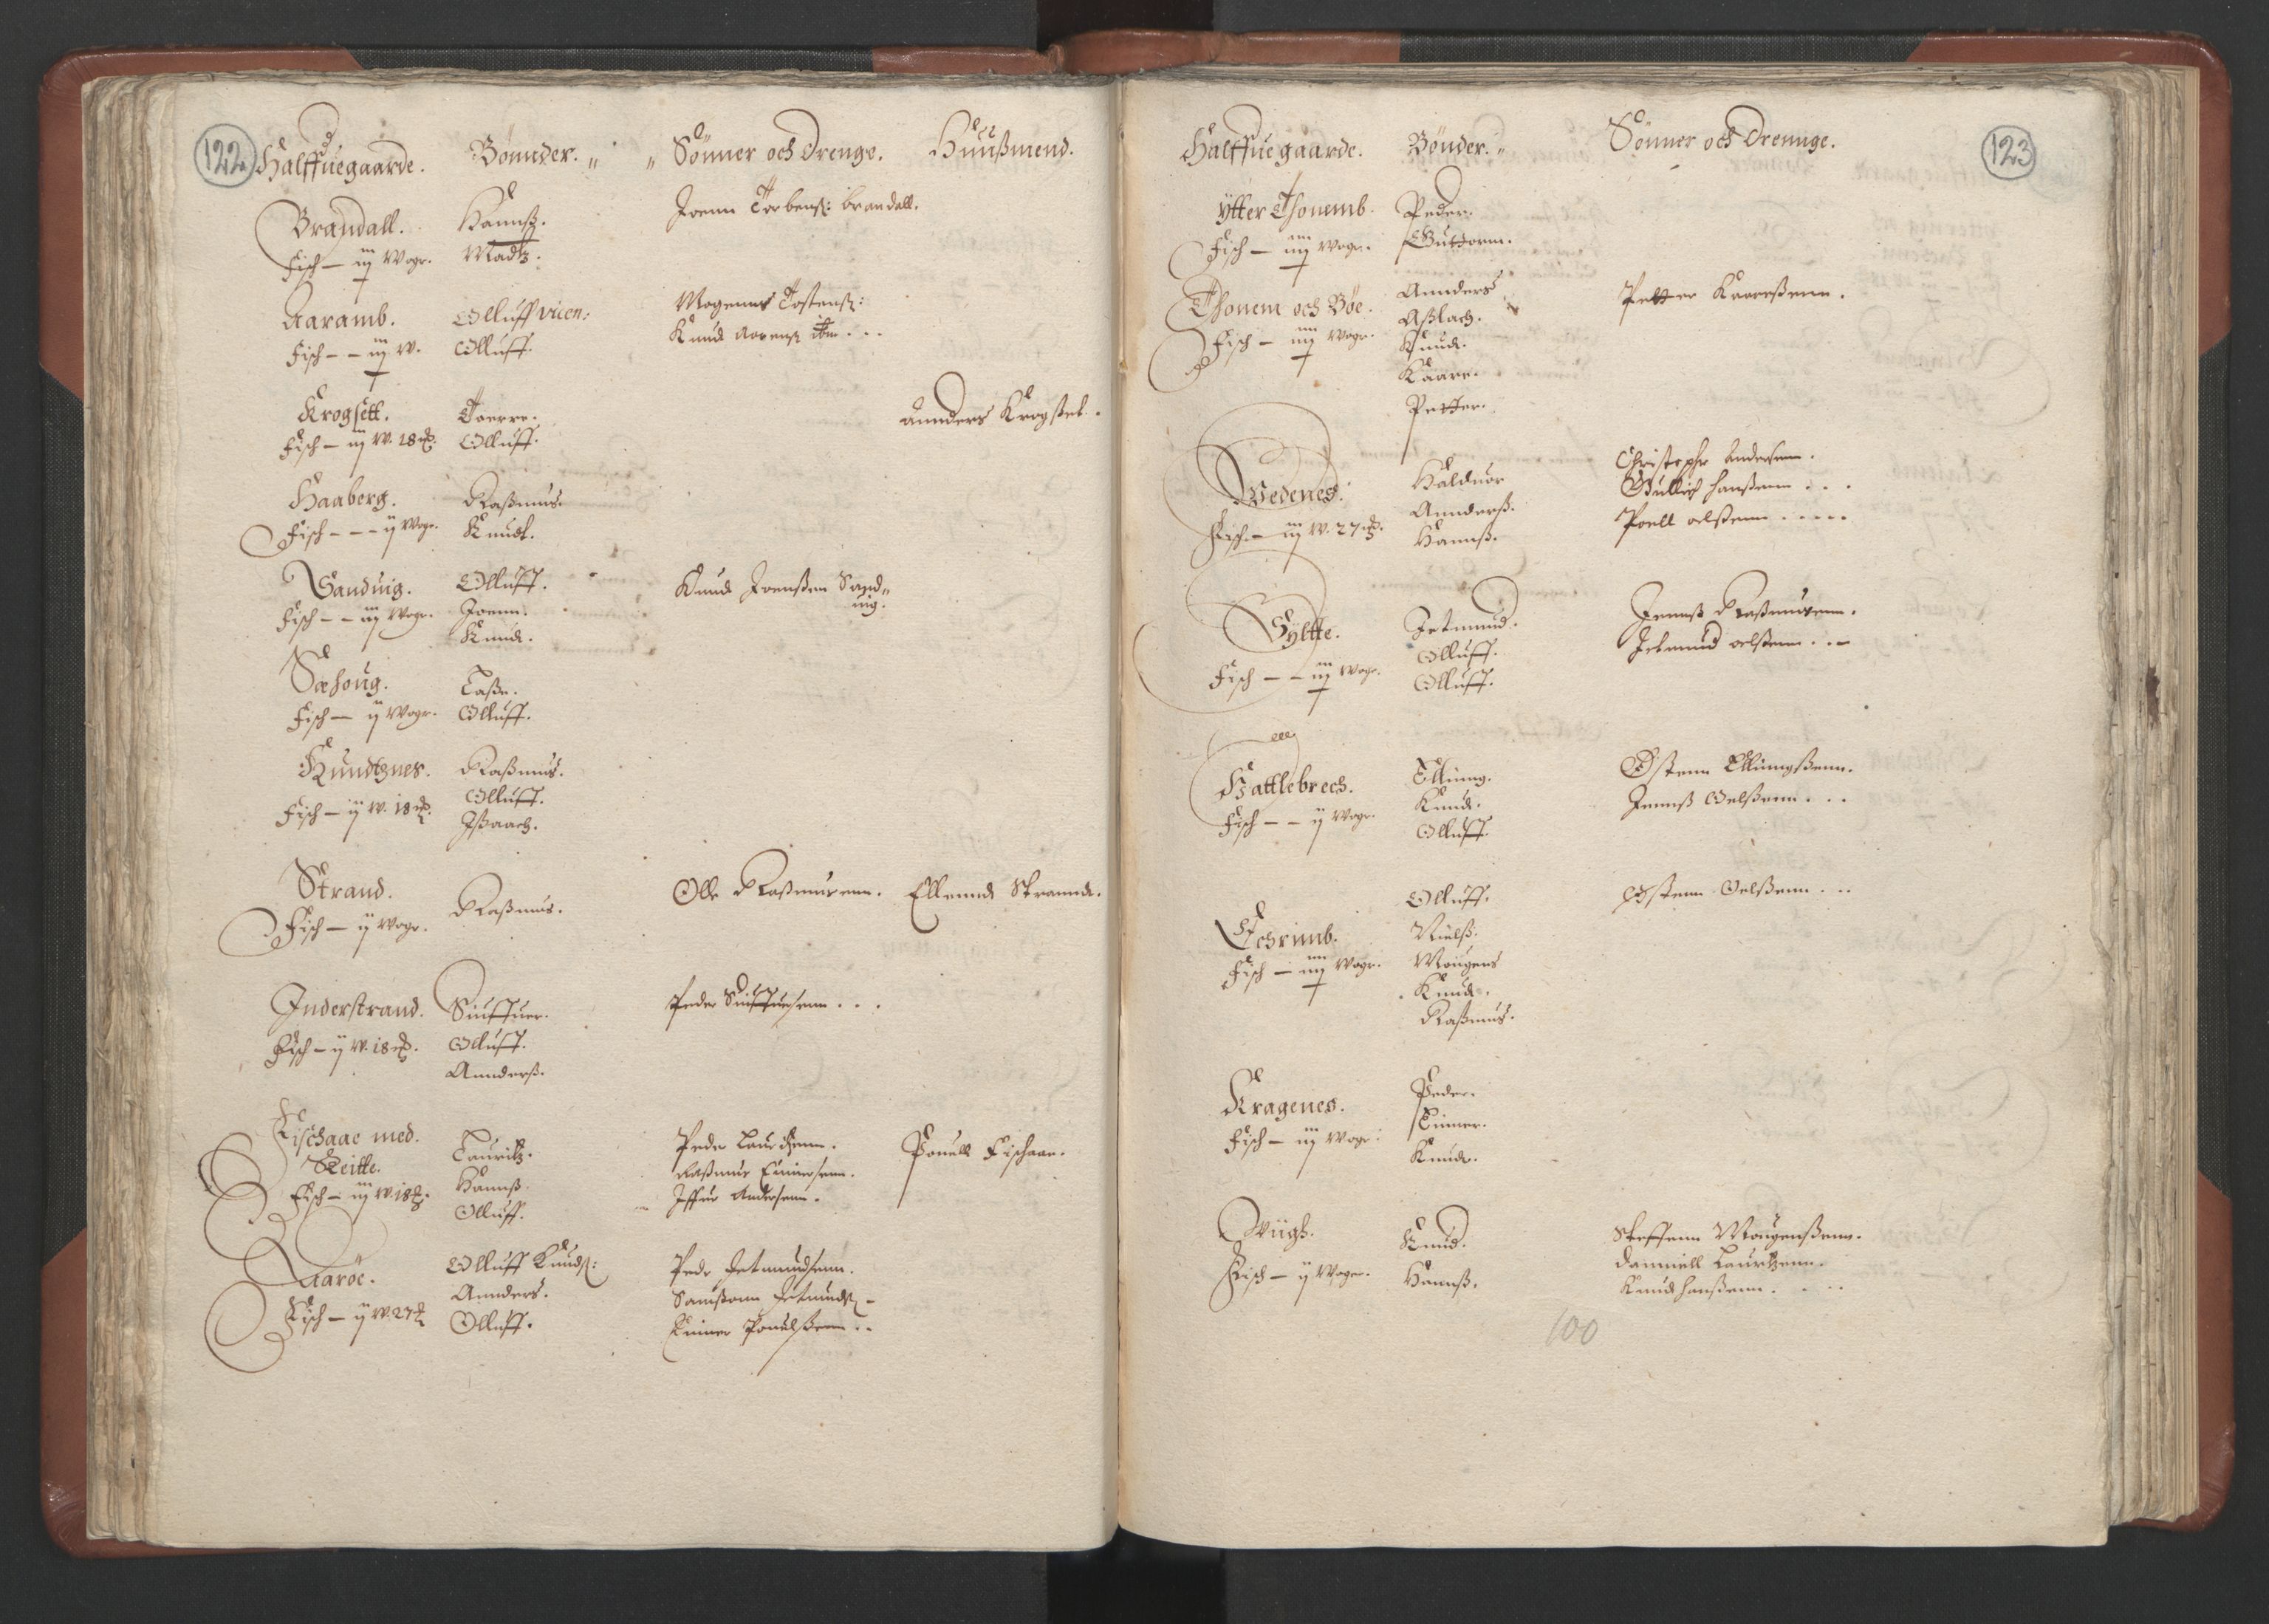 RA, Fogdenes og sorenskrivernes manntall 1664-1666, nr. 16: Romsdal fogderi og Sunnmøre fogderi, 1664-1665, s. 122-123